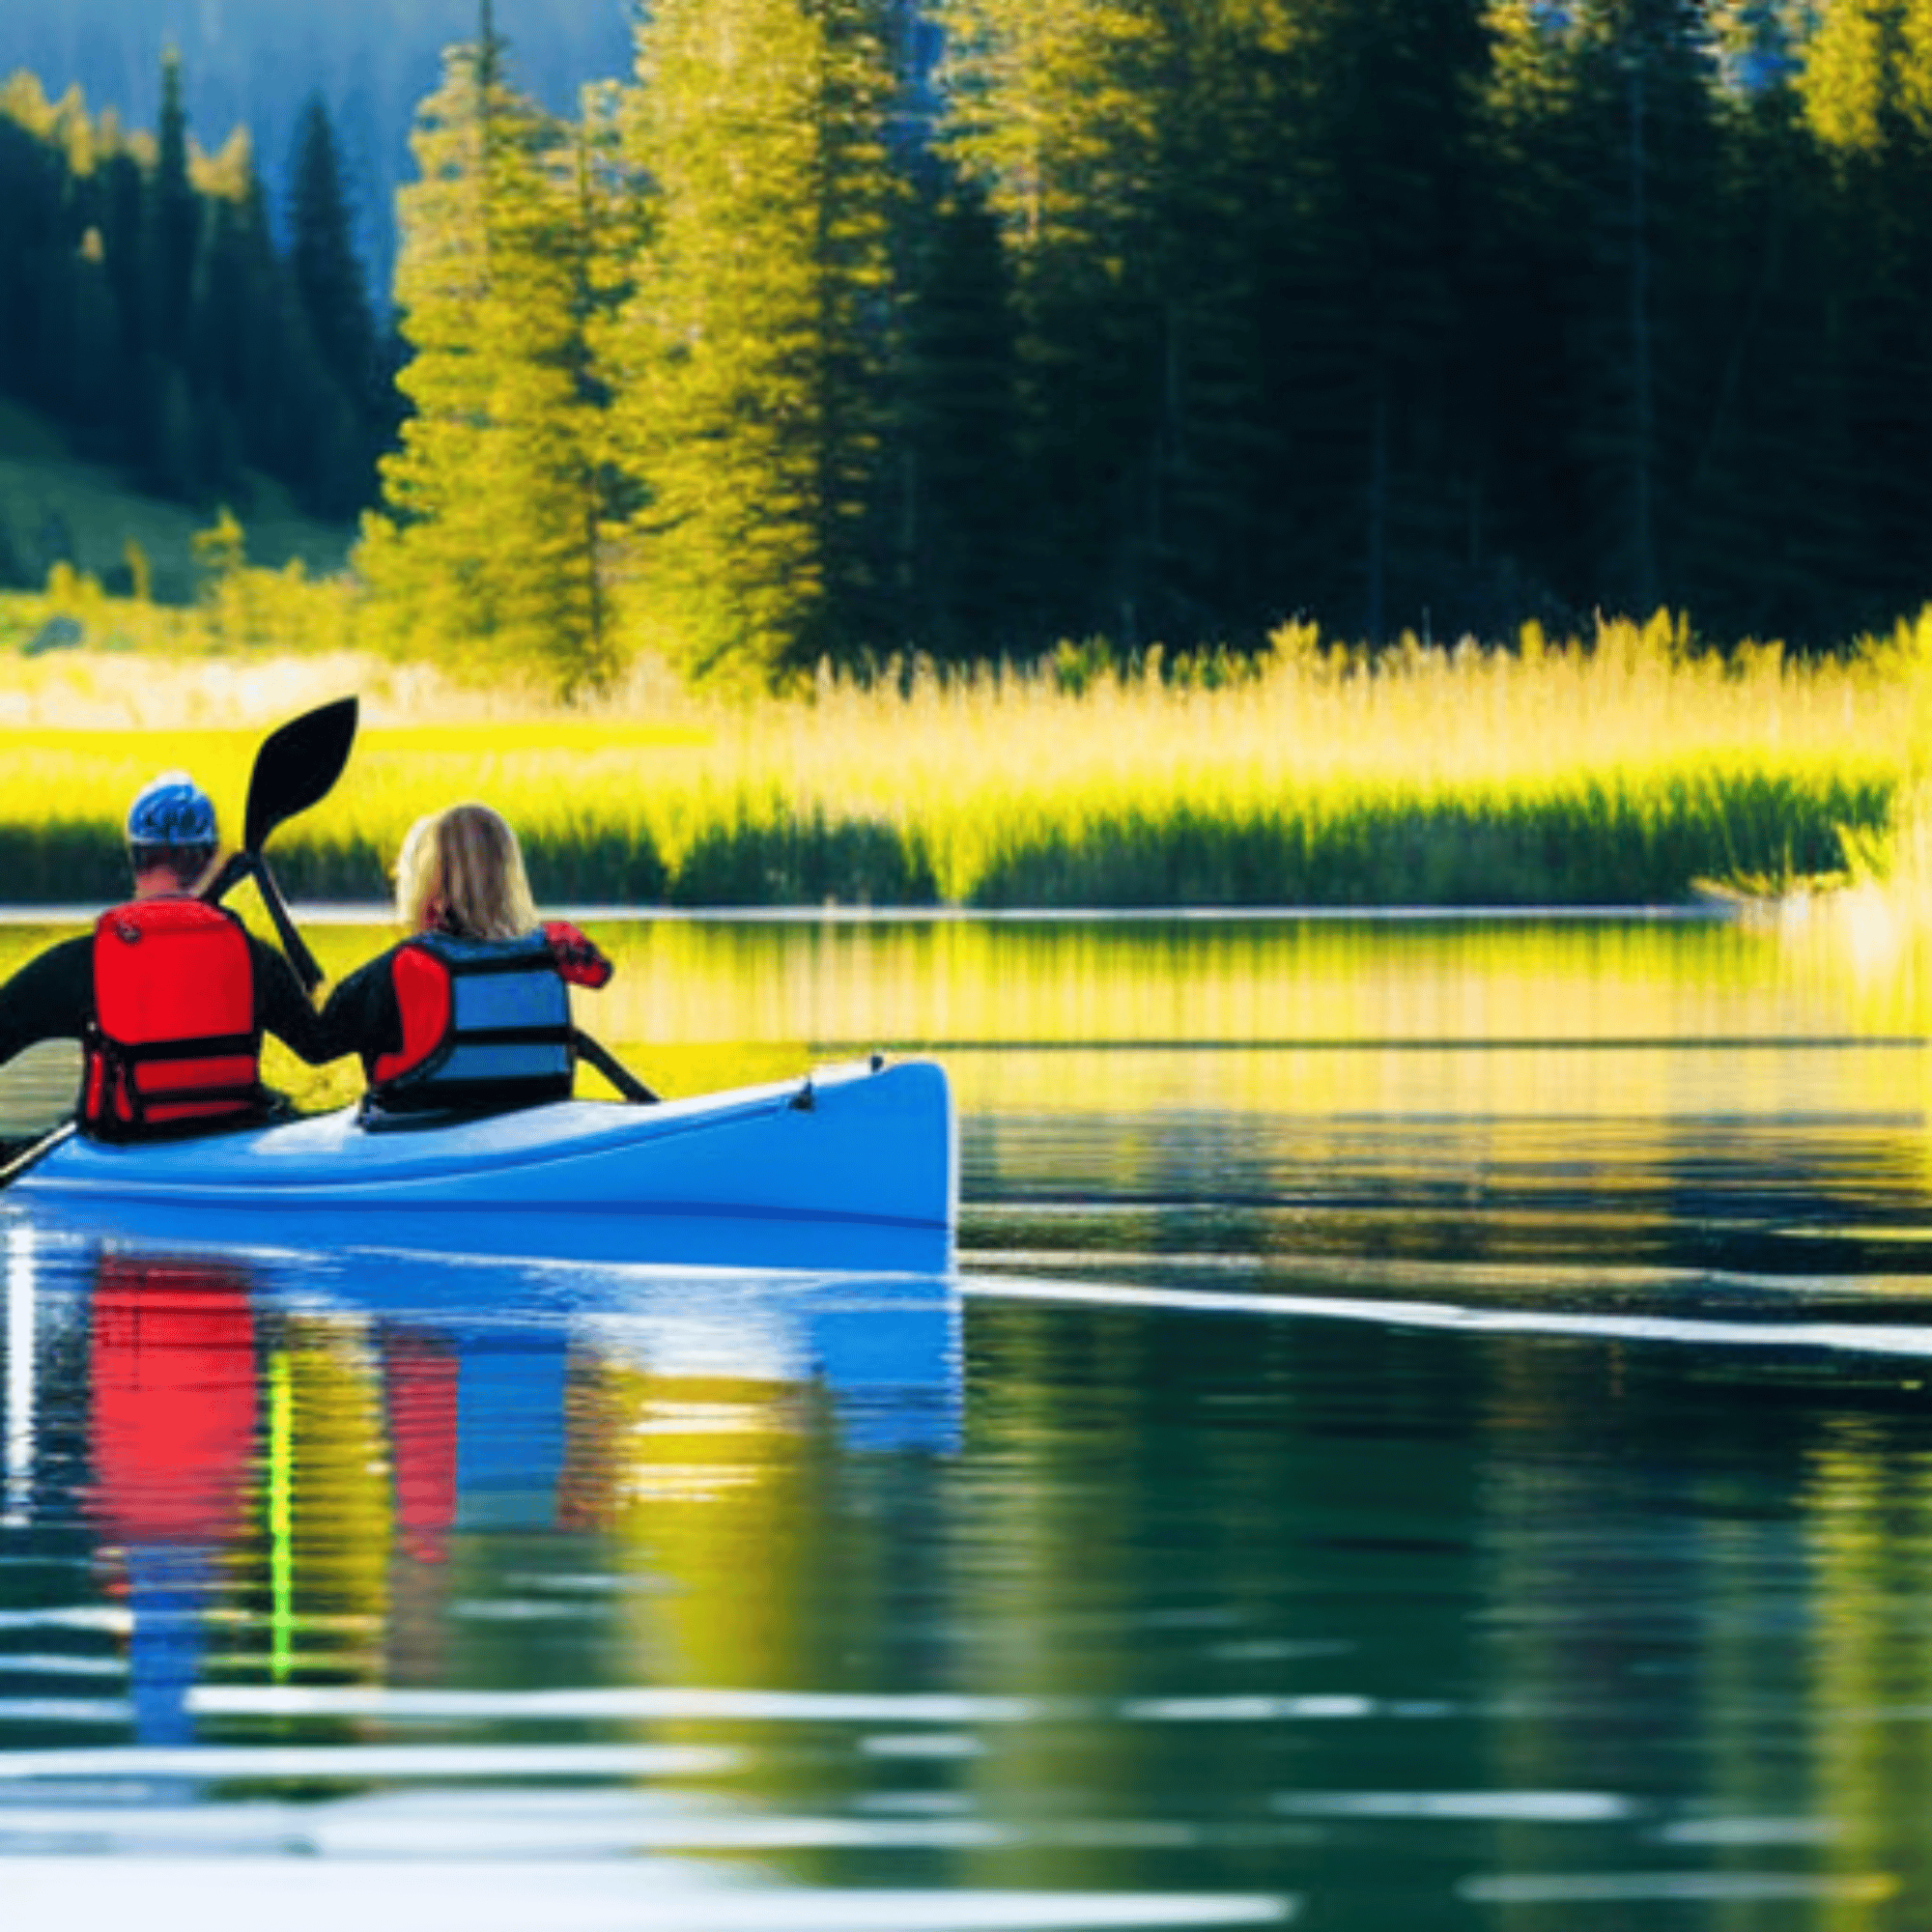 A couple kayaking on a lake